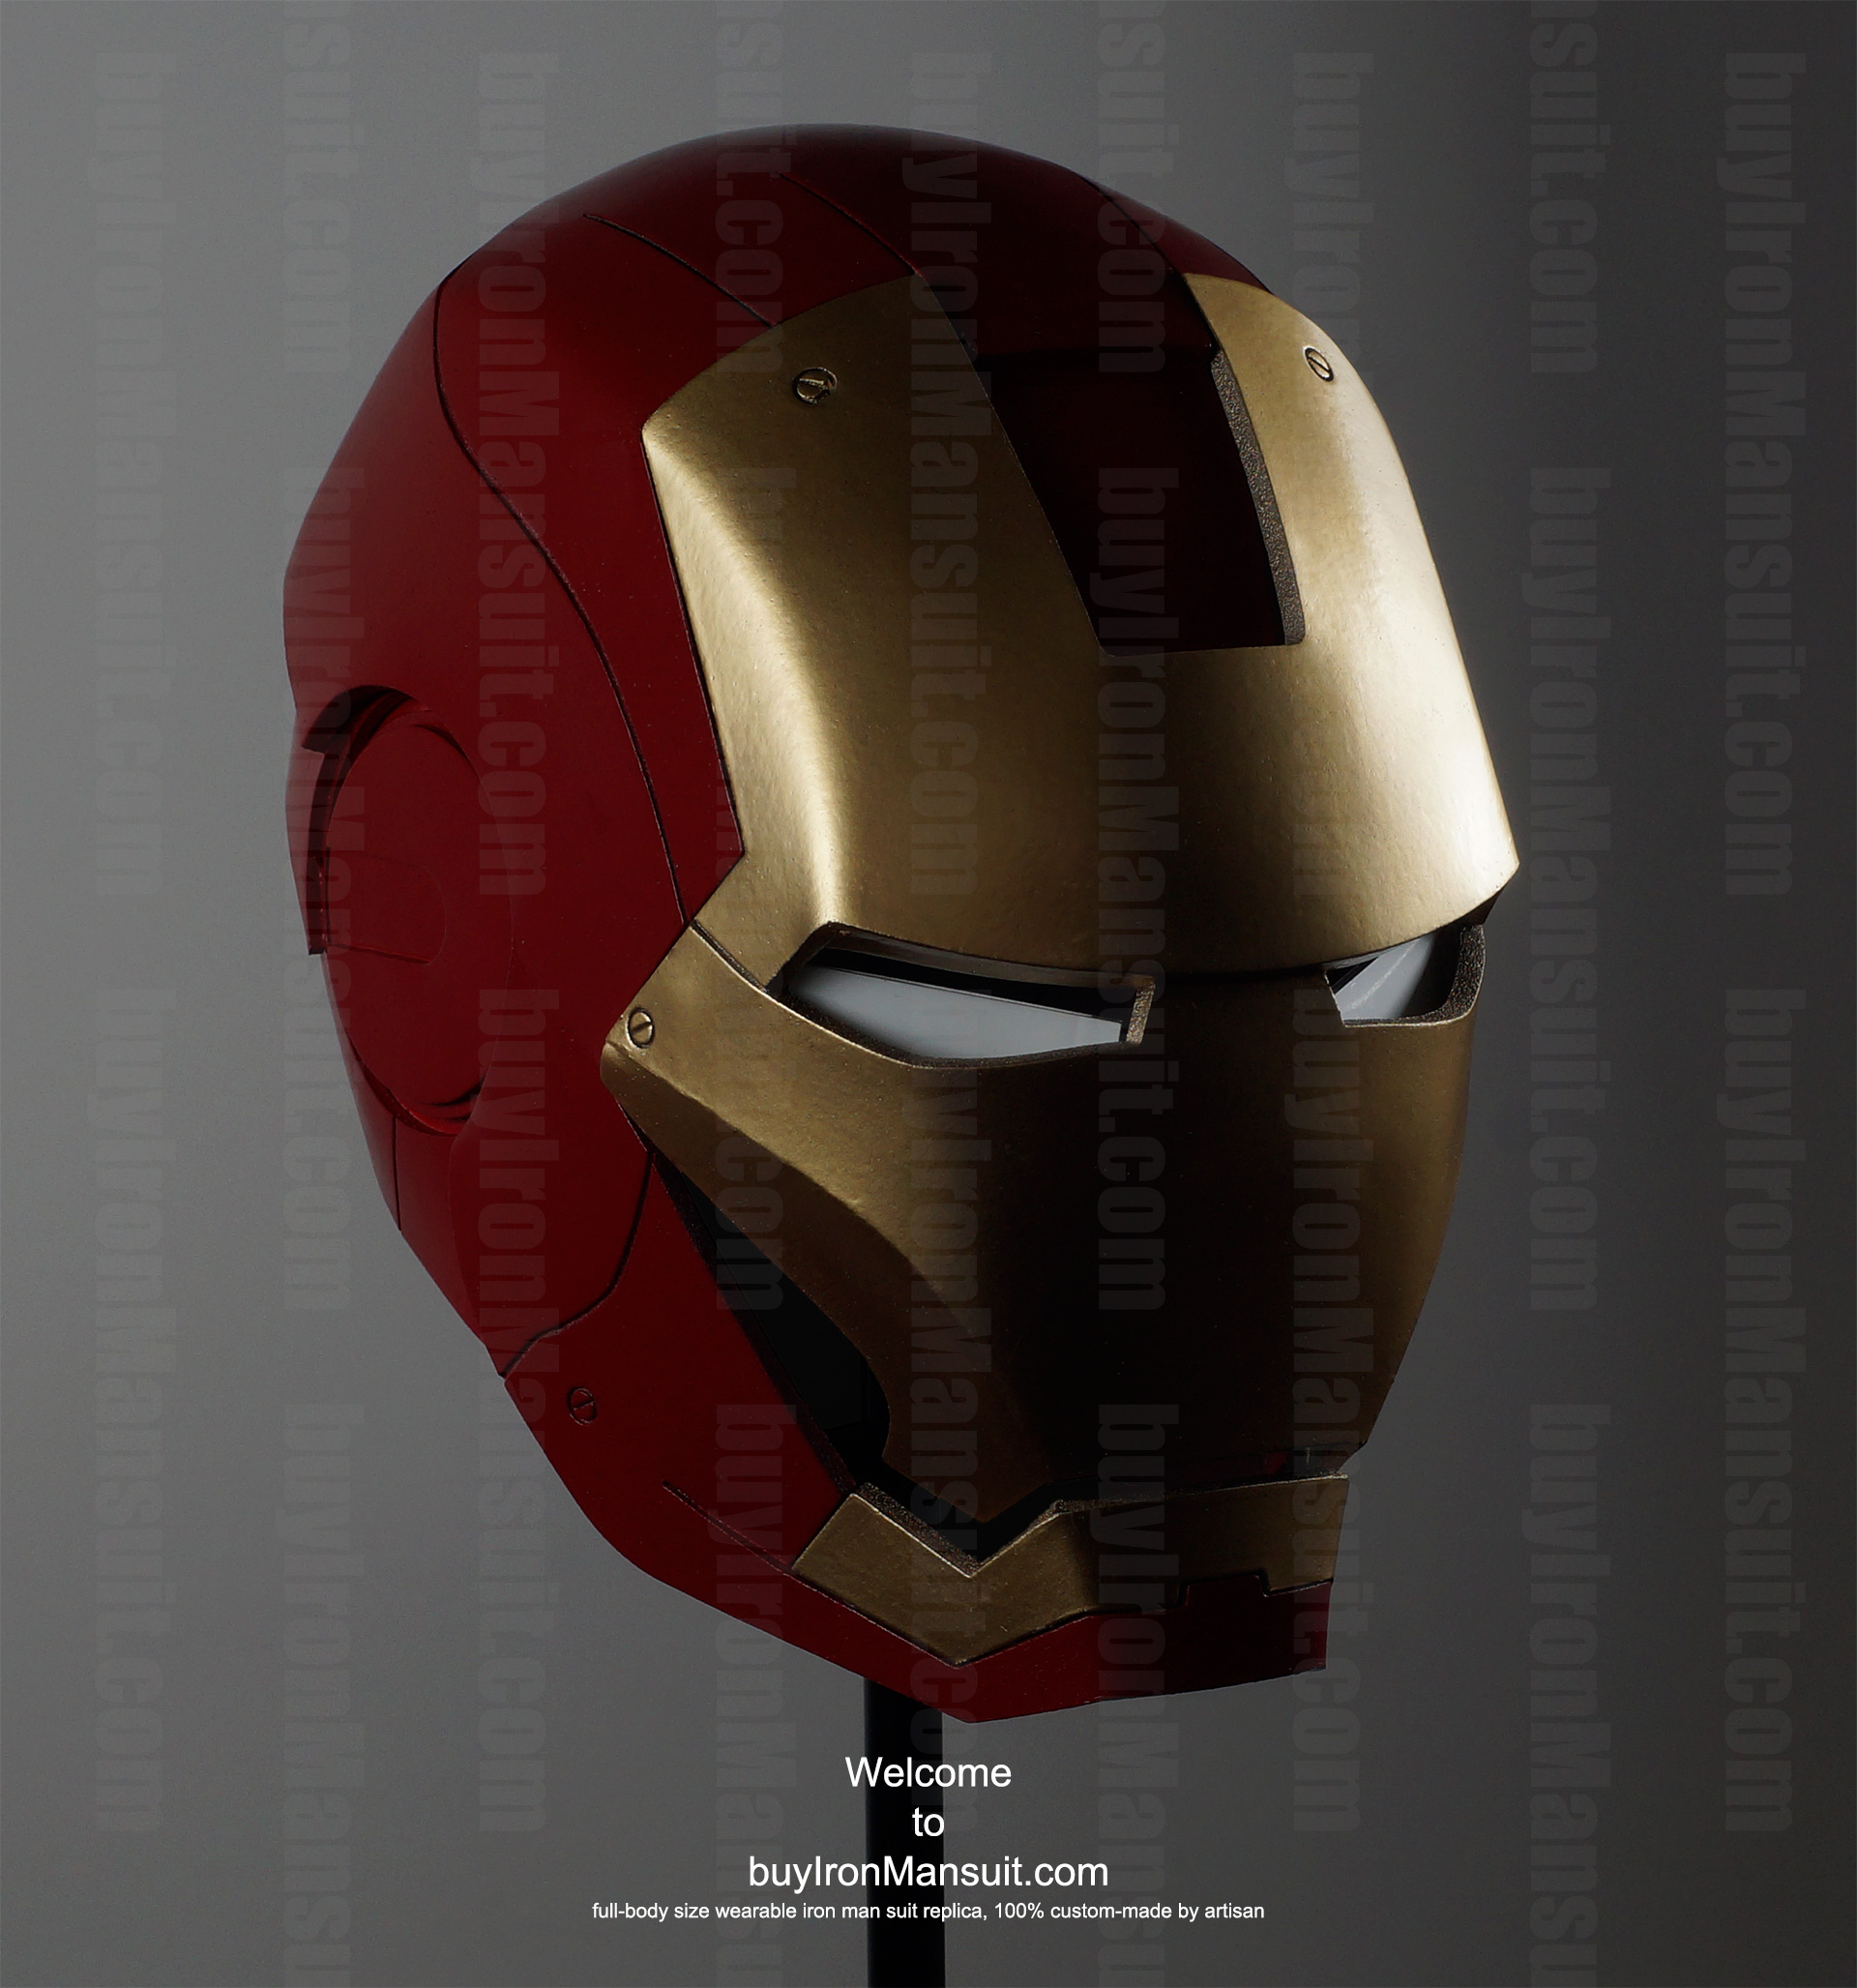 Buy Iron Man suit, Halo Master Chief armor, Batman costume ...